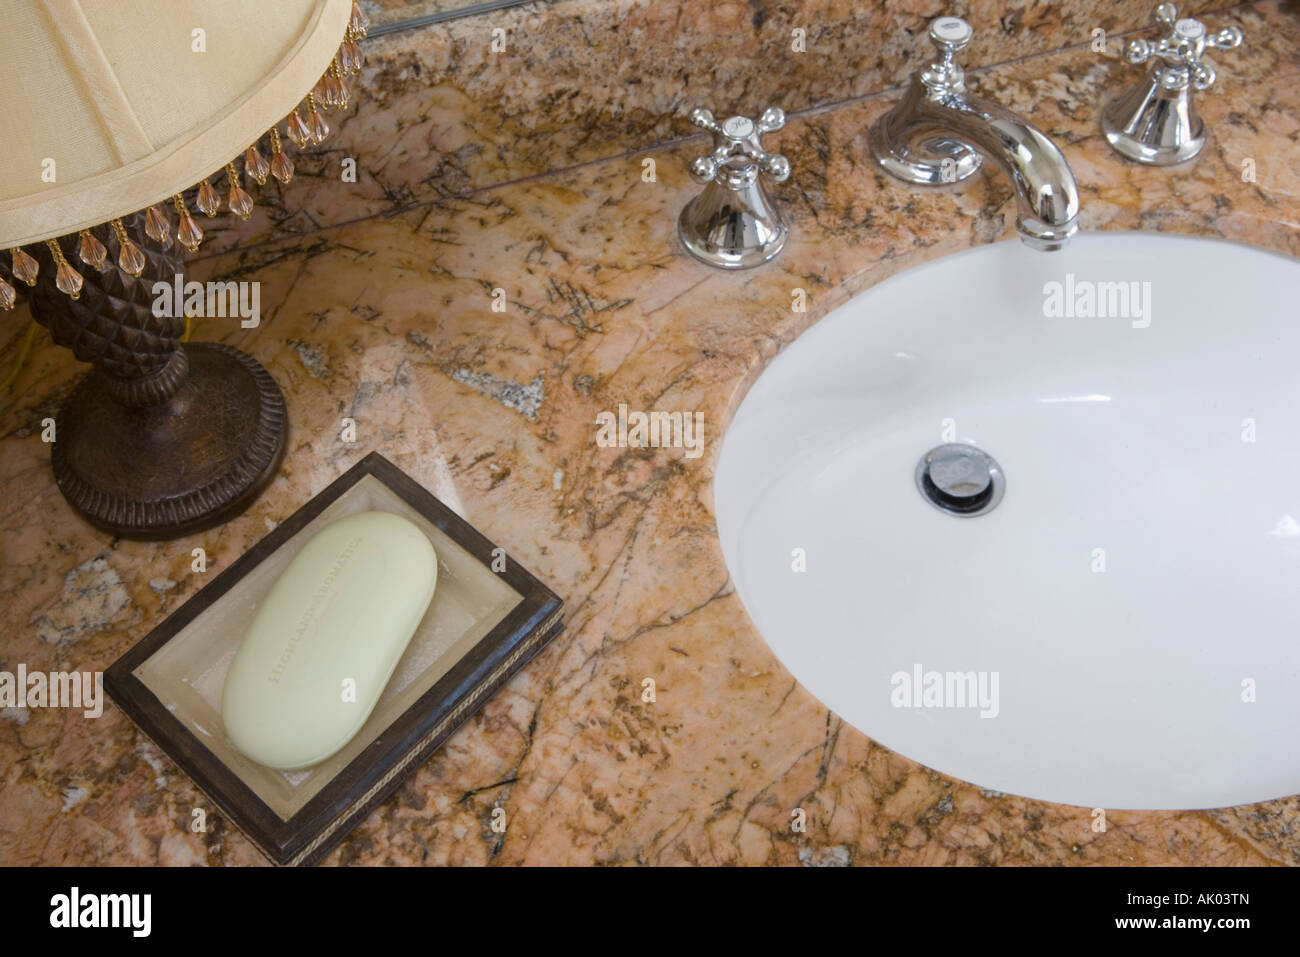 Detalle de lavabo con grifo cromado y jabonera Foto de stock